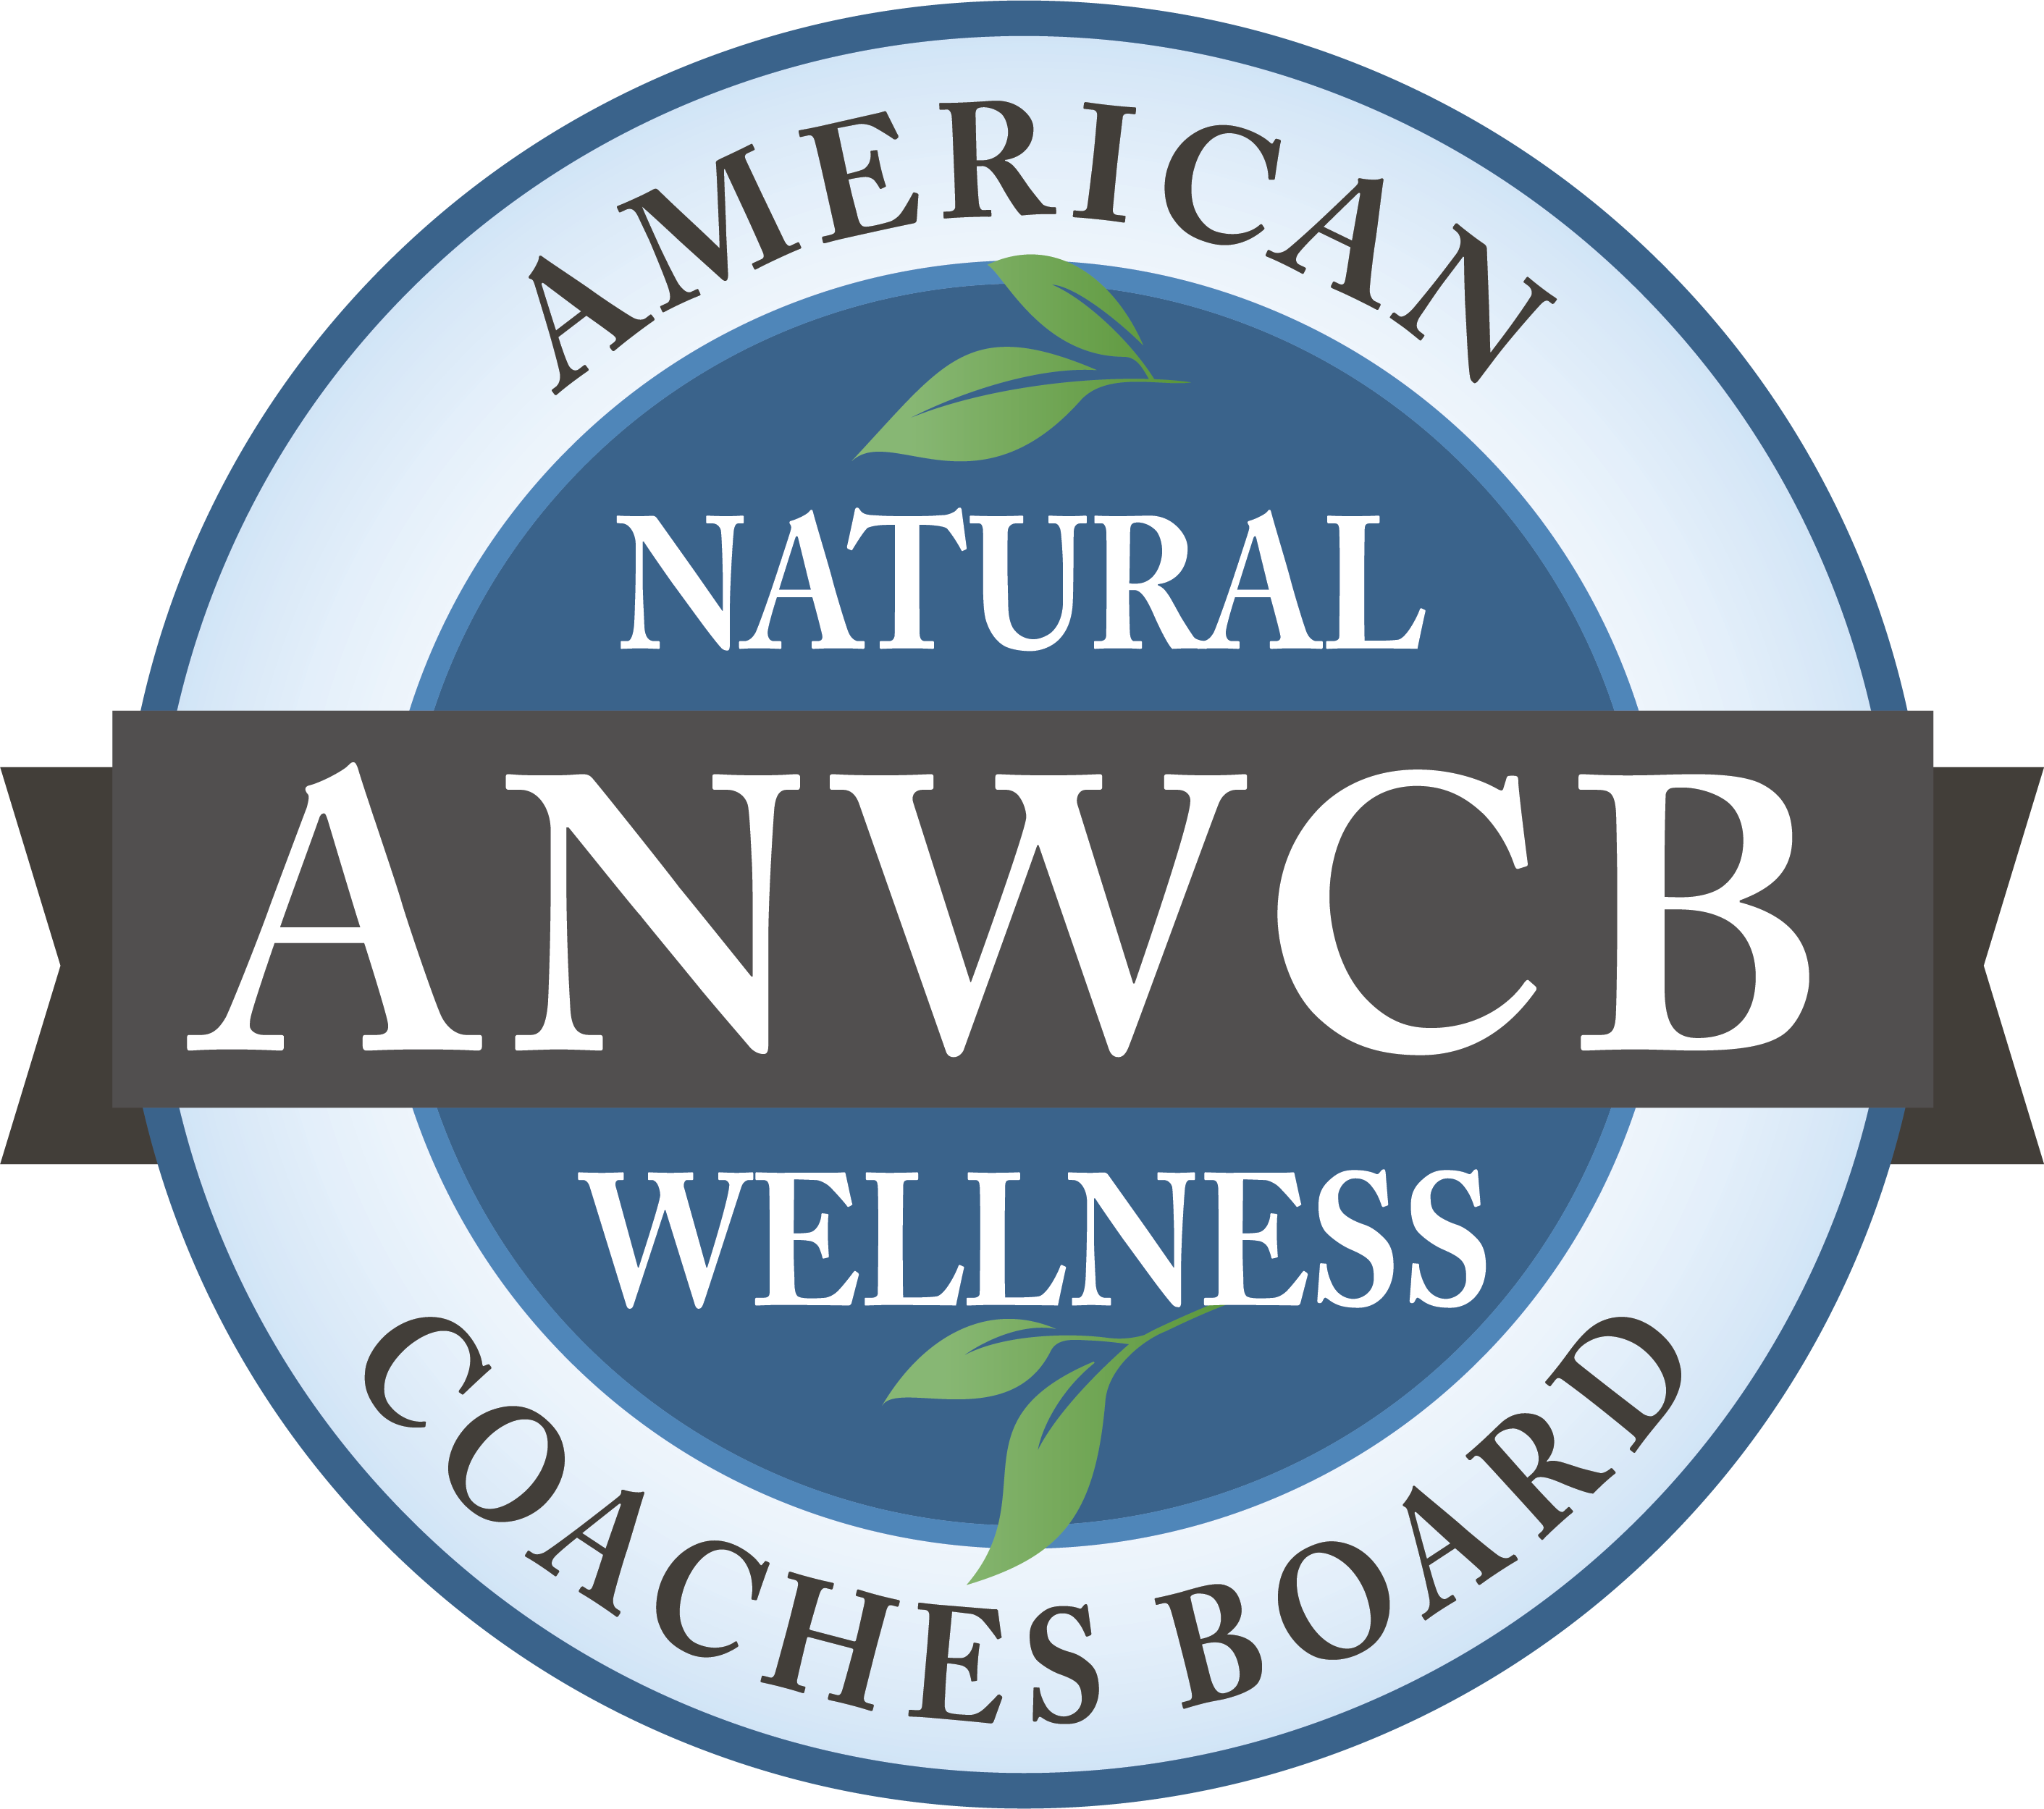 American Natural Wellness Coaches Board logo